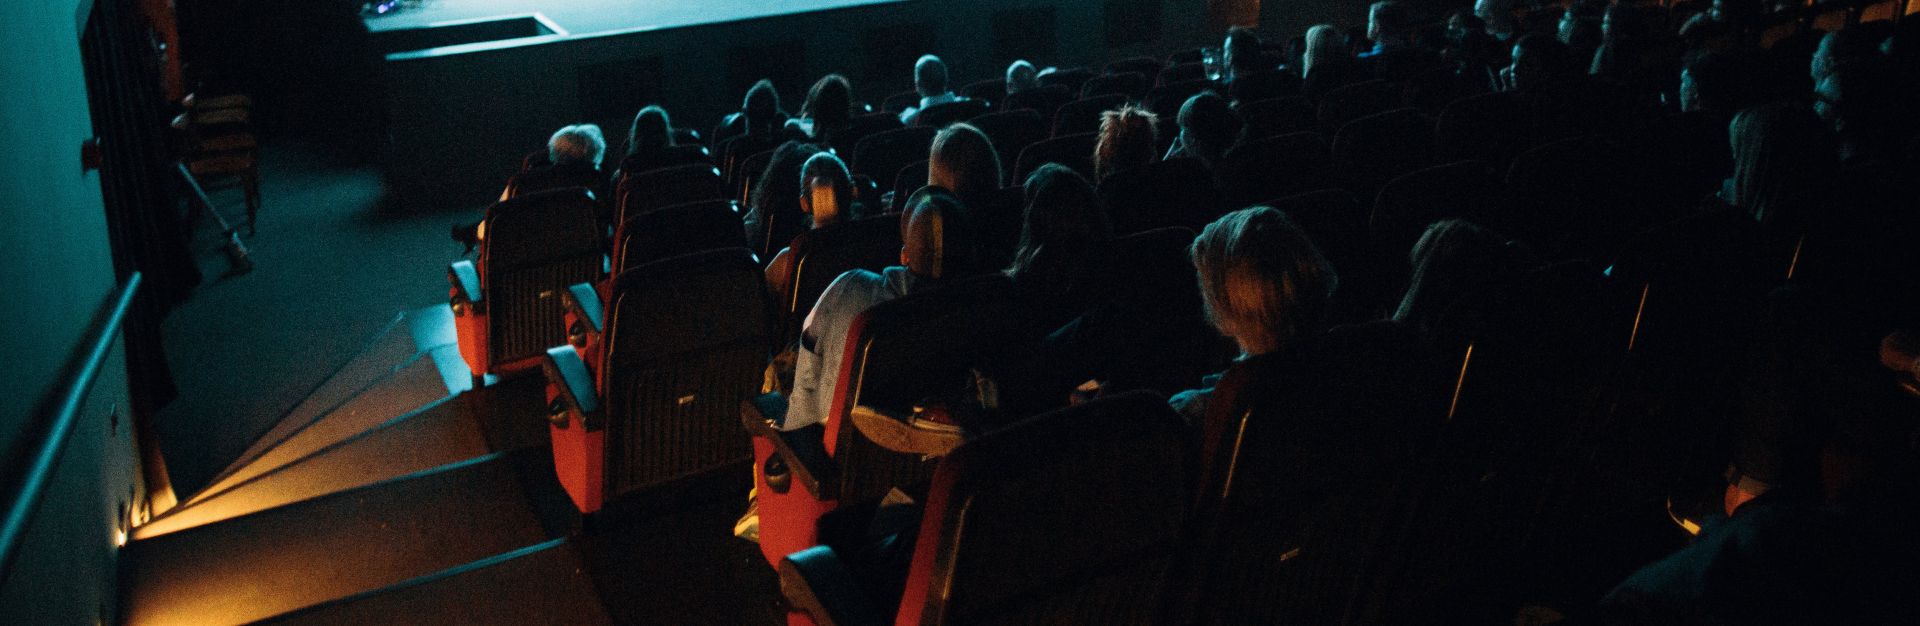 People Watching Movie on a Cinema